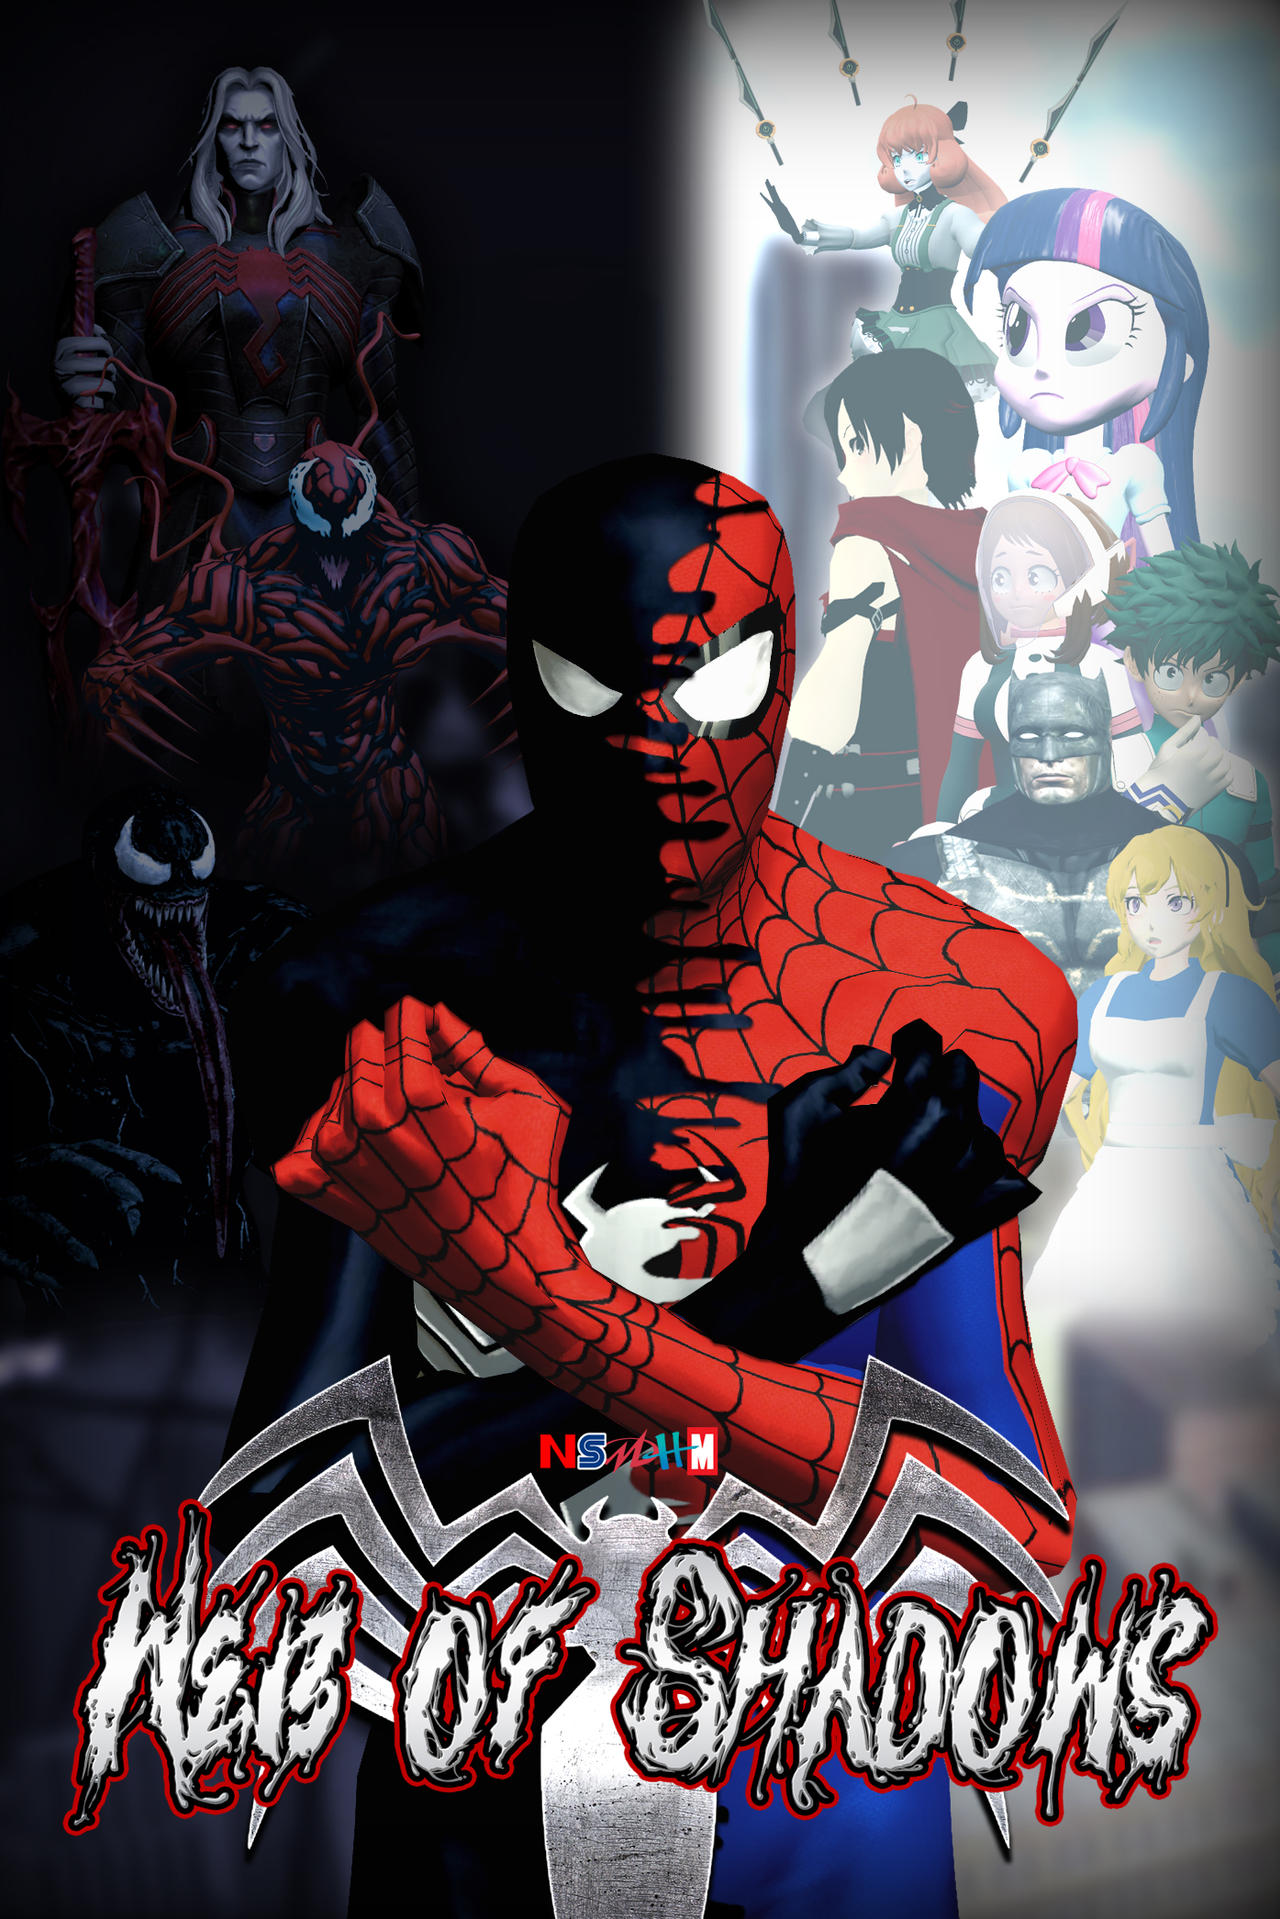 Spider - Man: Web Of Shadows (Movie) by Potiuk on @DeviantArt